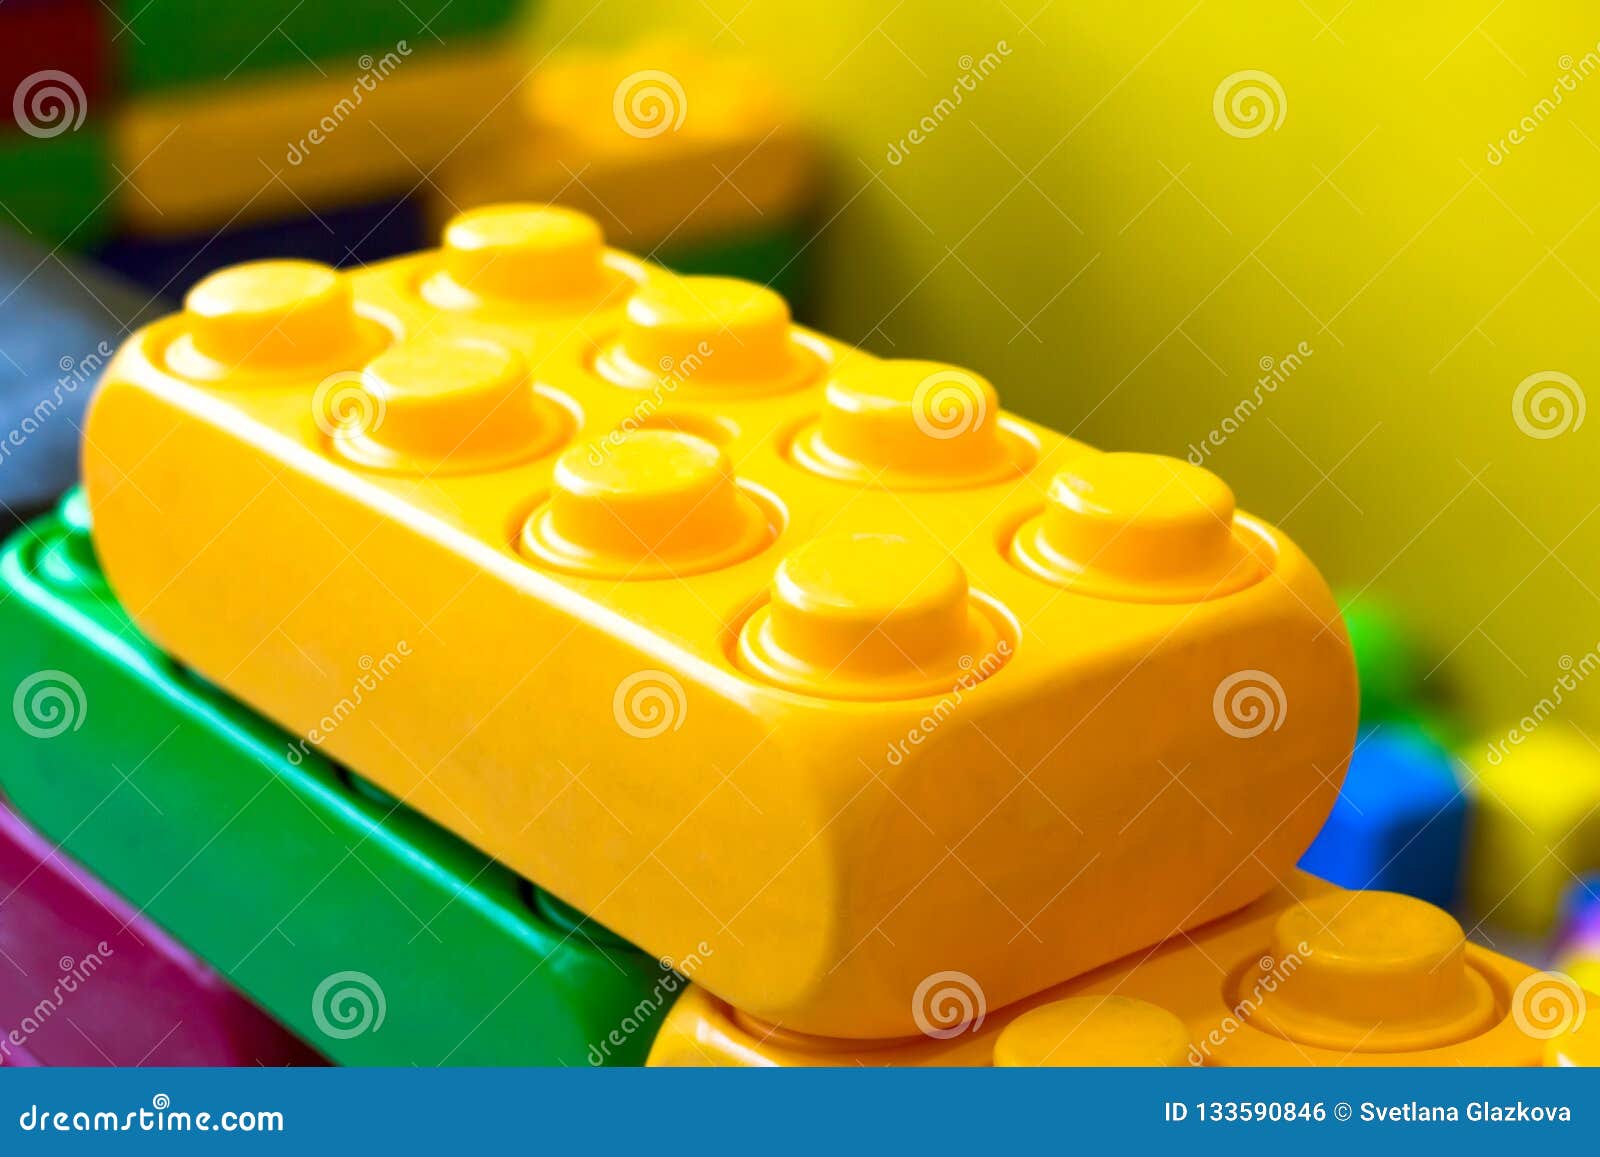 lego blocks on the children`s playgroud.